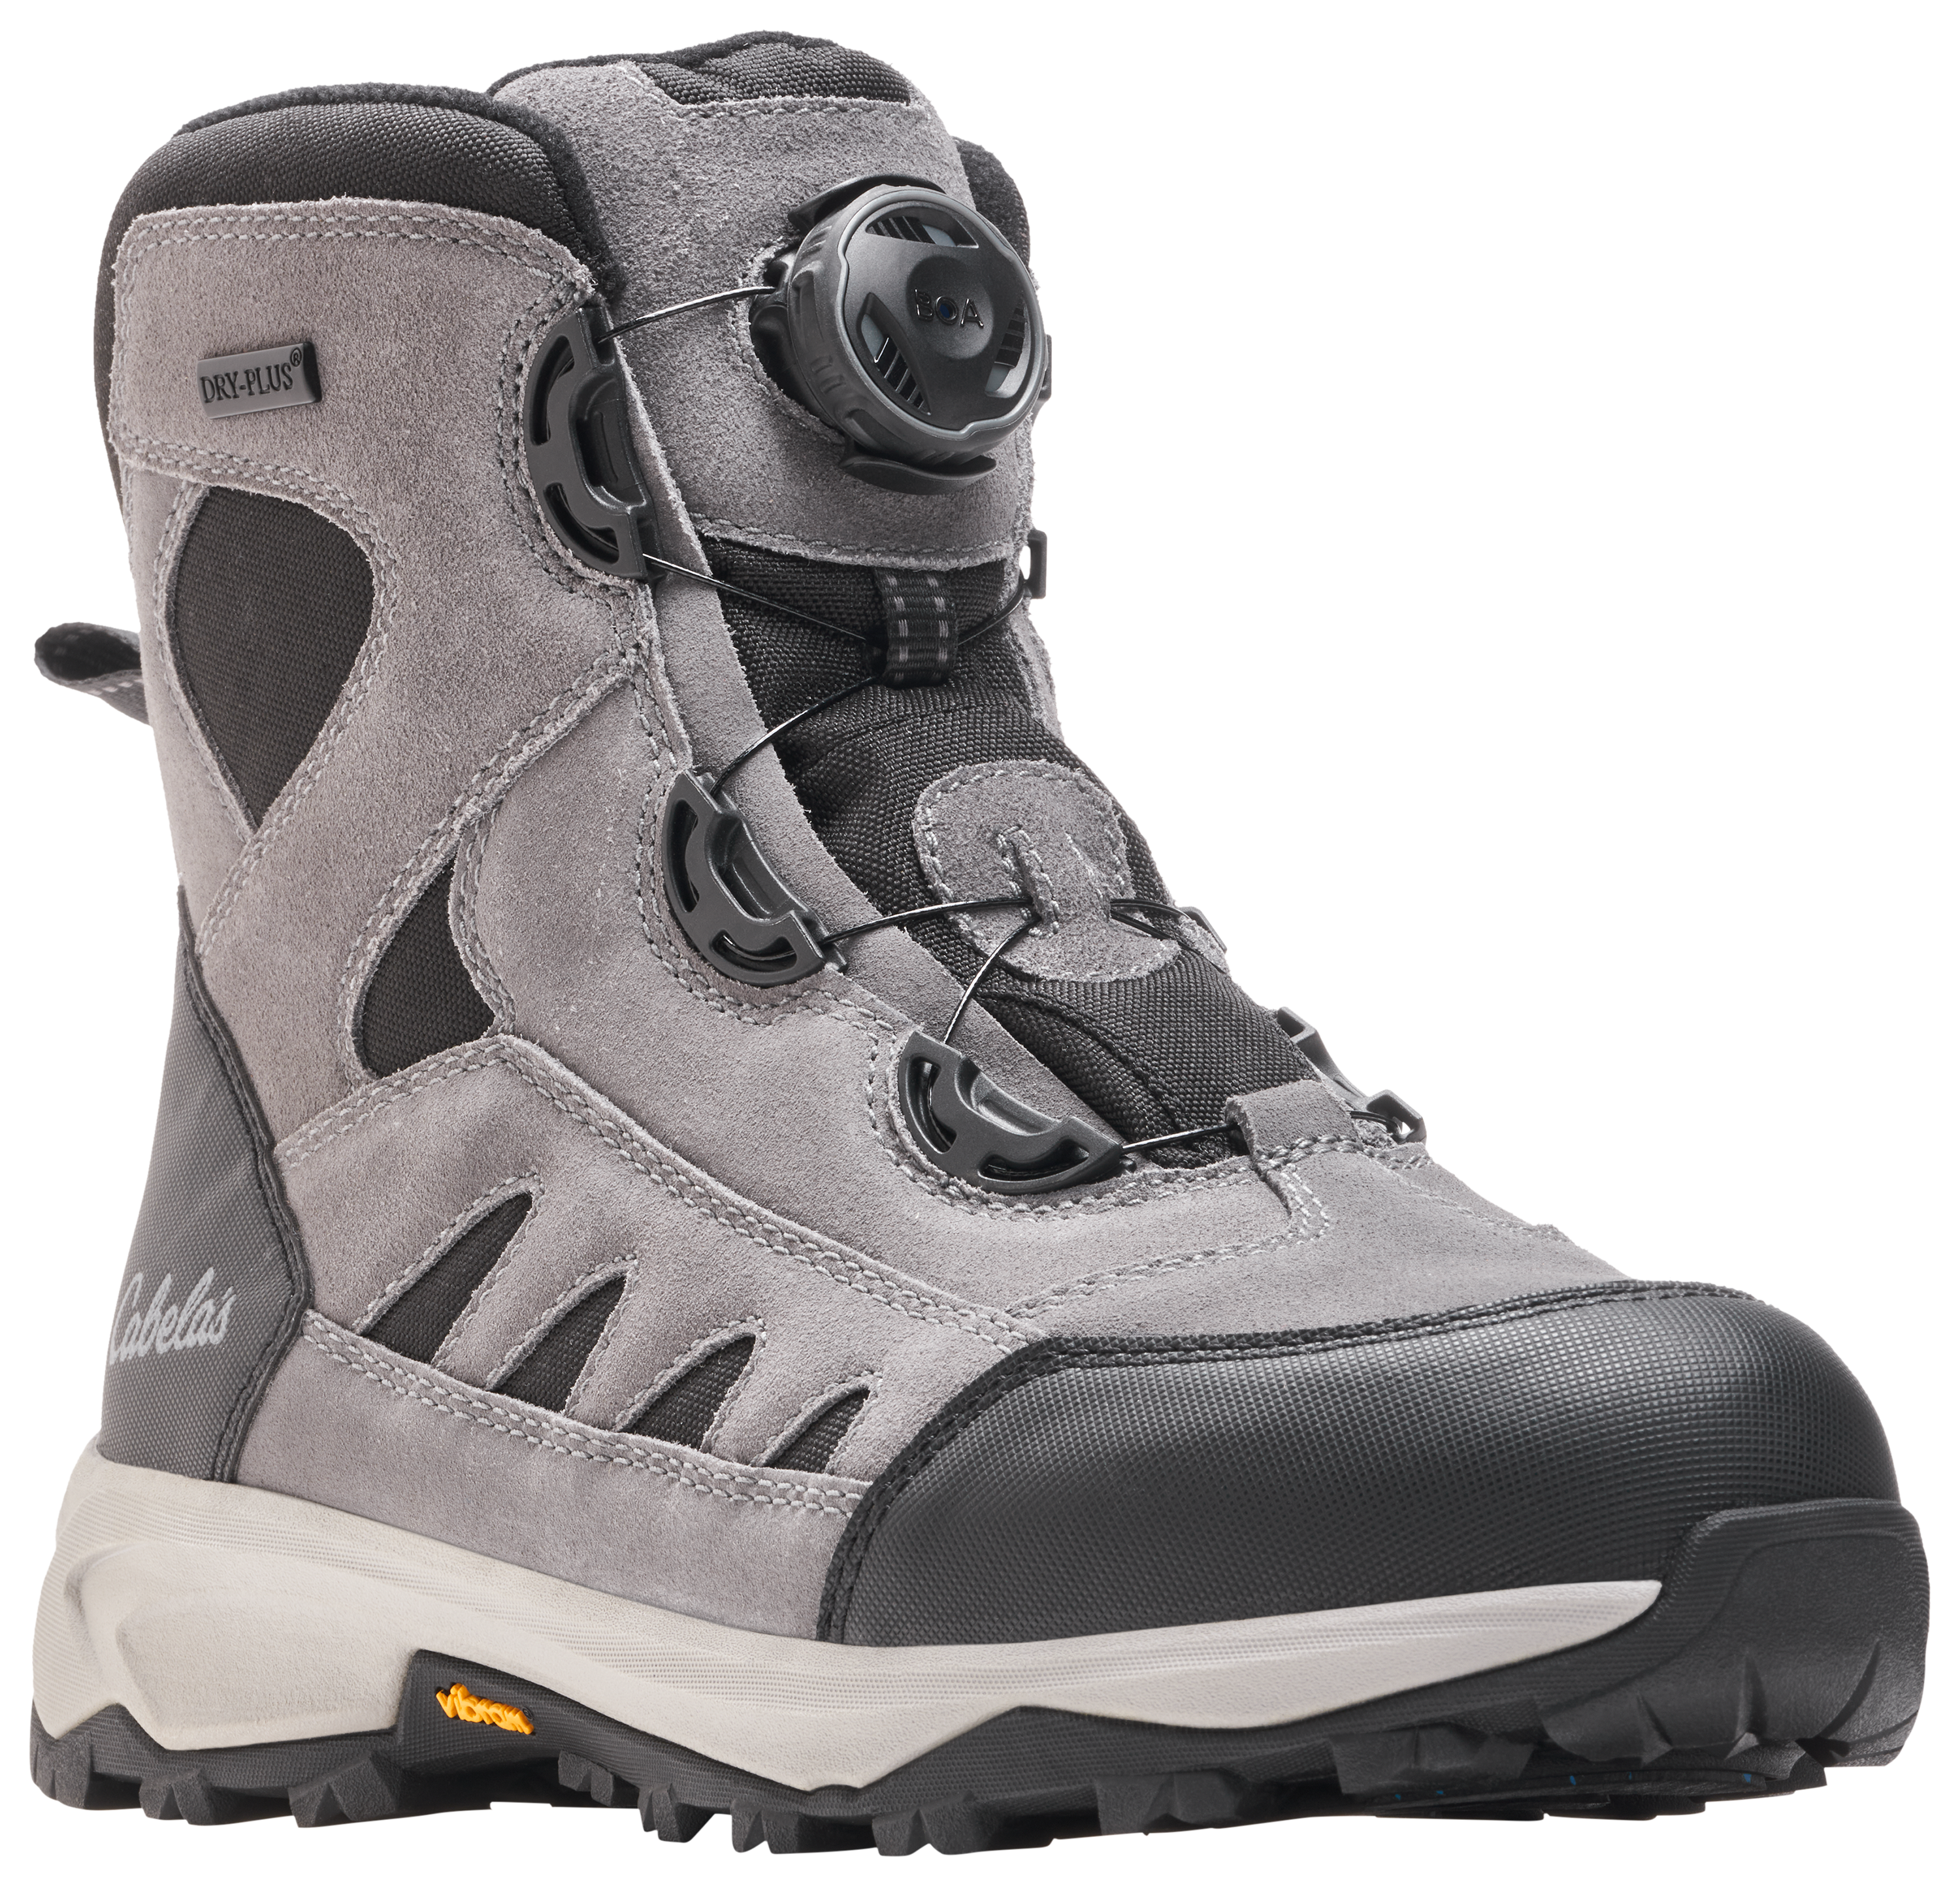 Cabela's Snow Runner Max 2.0 BOA Insulated Waterproof Winter Boots for Men - Granite Gray - 10M